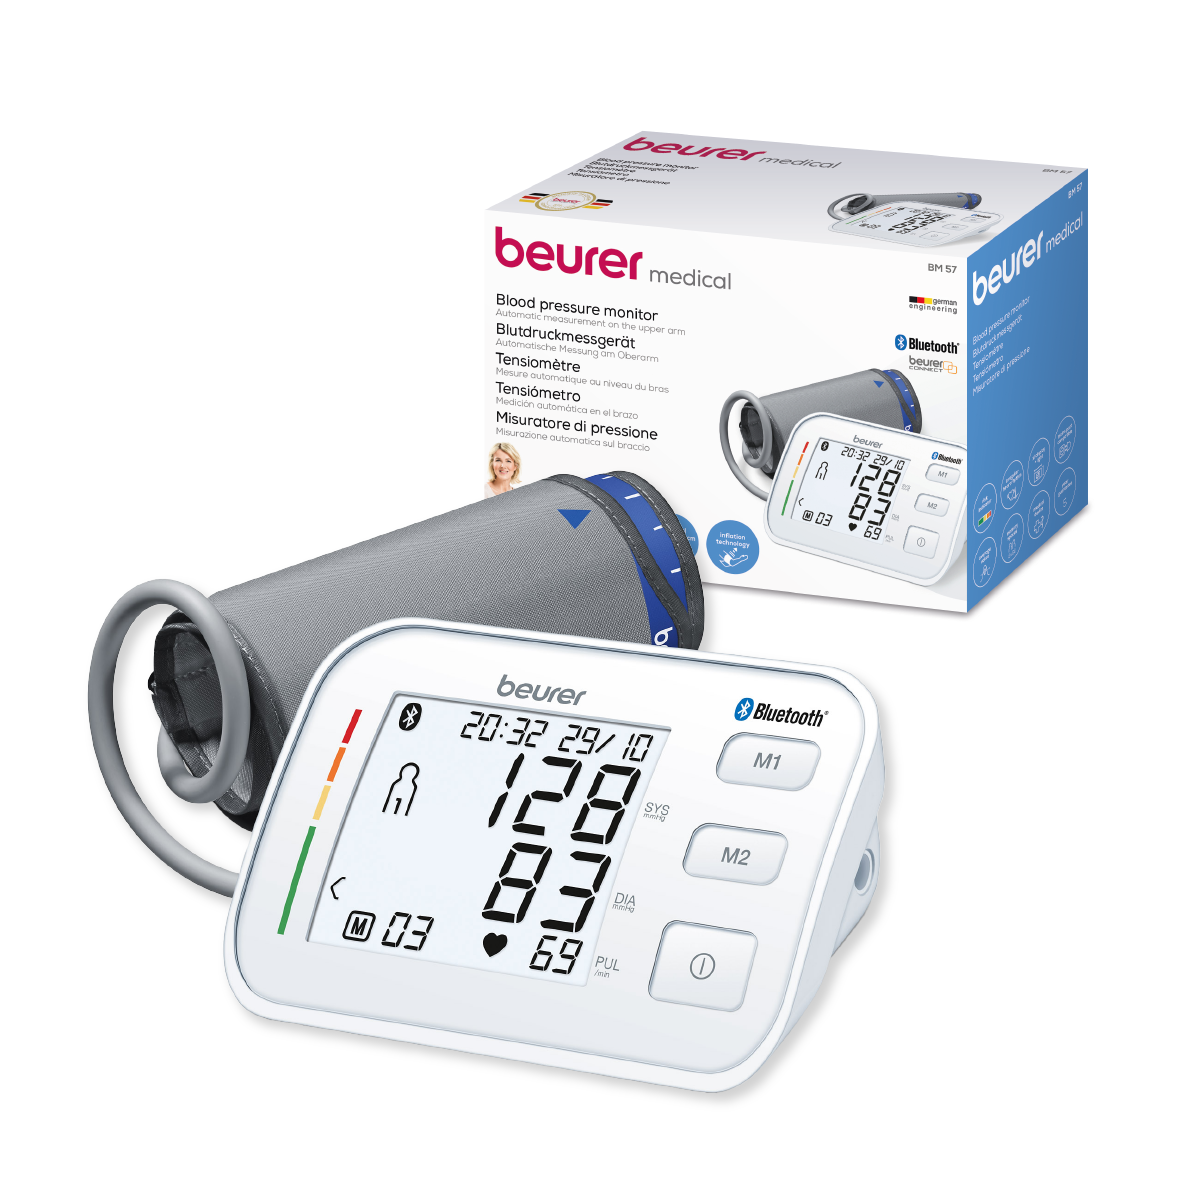 Monitor de presión arterial baumanómetro digital de brazo con bluetooth BM57 Marca Beurer